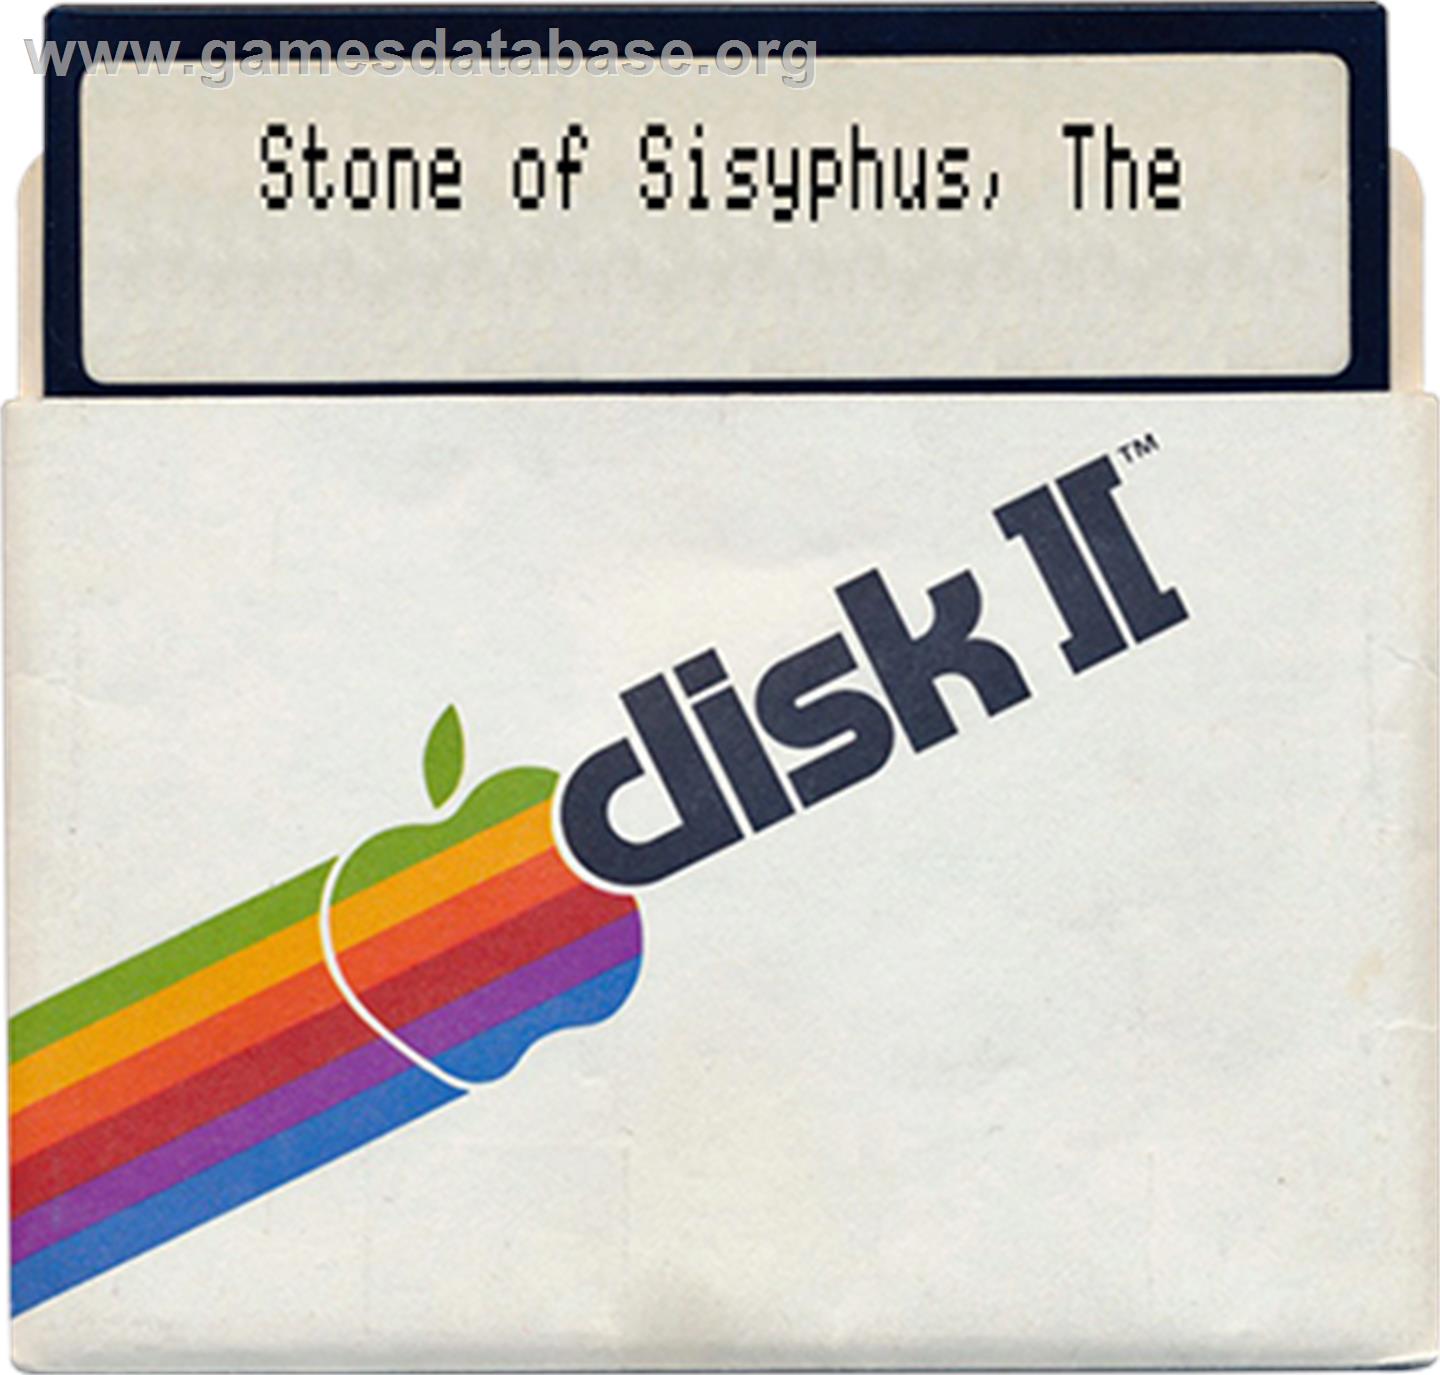 Stone of Sisyphus - Apple II - Artwork - Disc